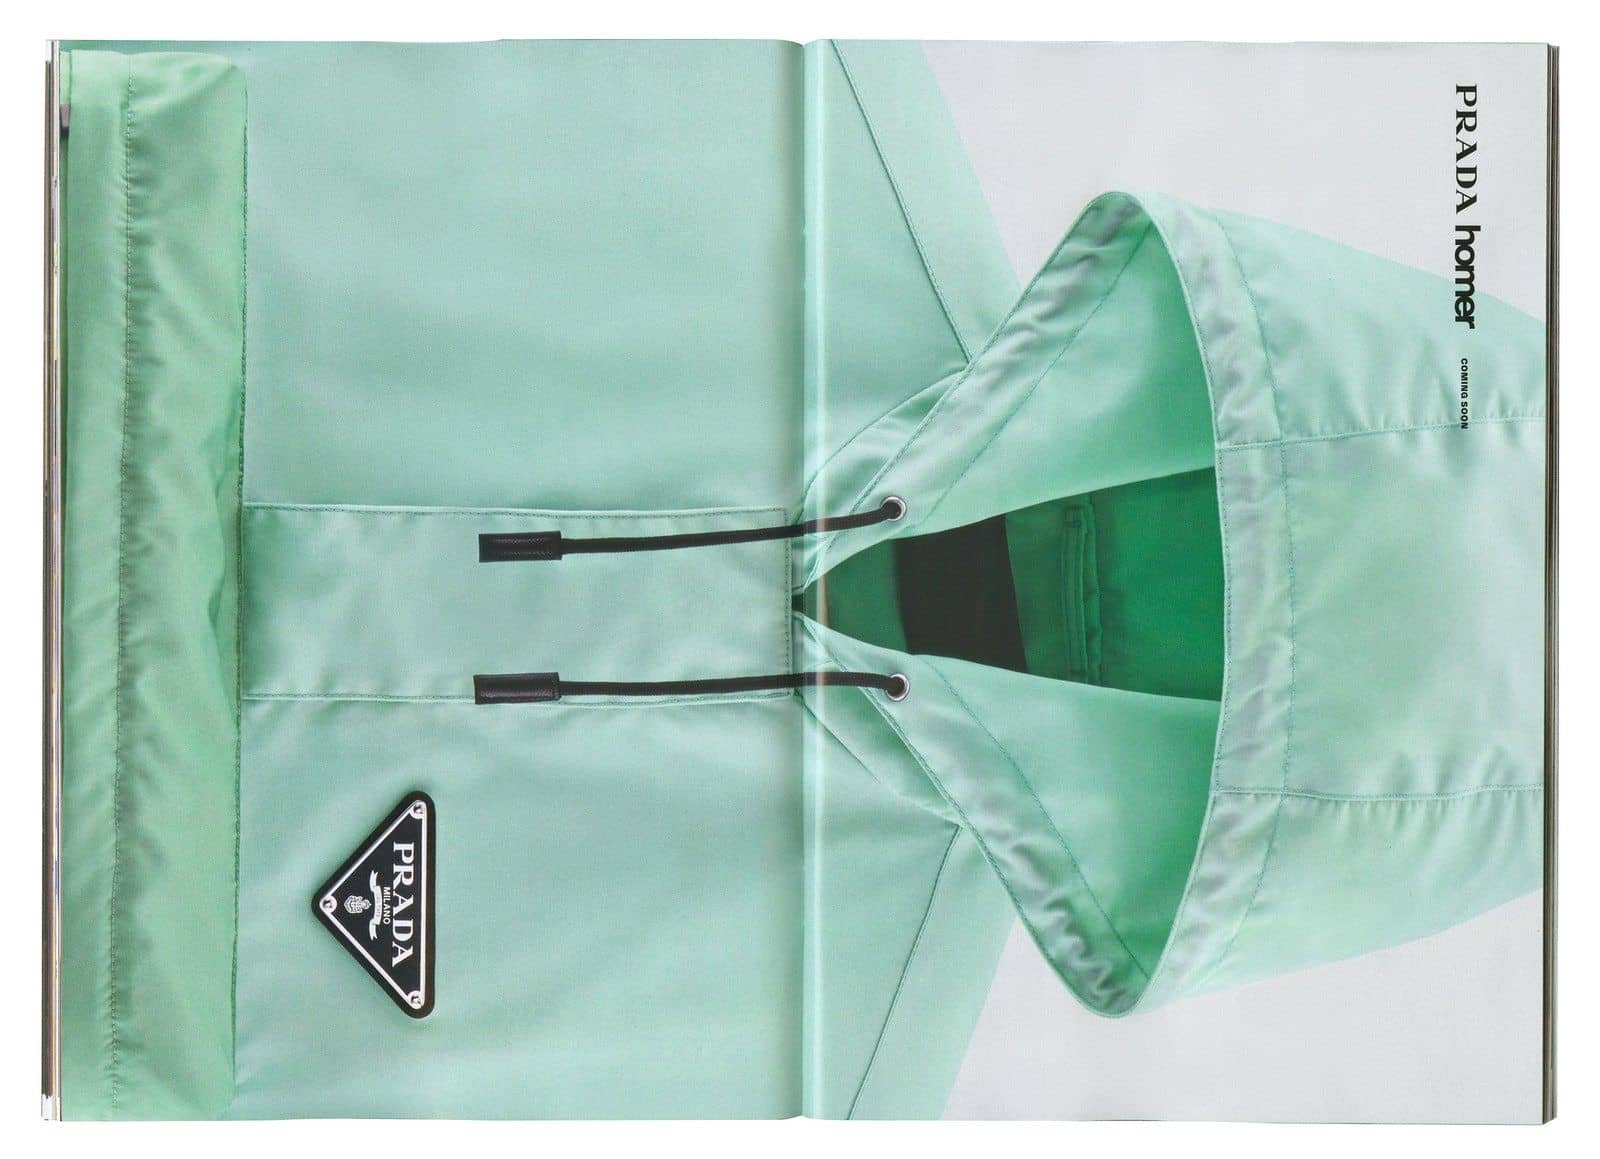 Seafoam green Homer/Prada hoodie alludes to a future collaboration. 